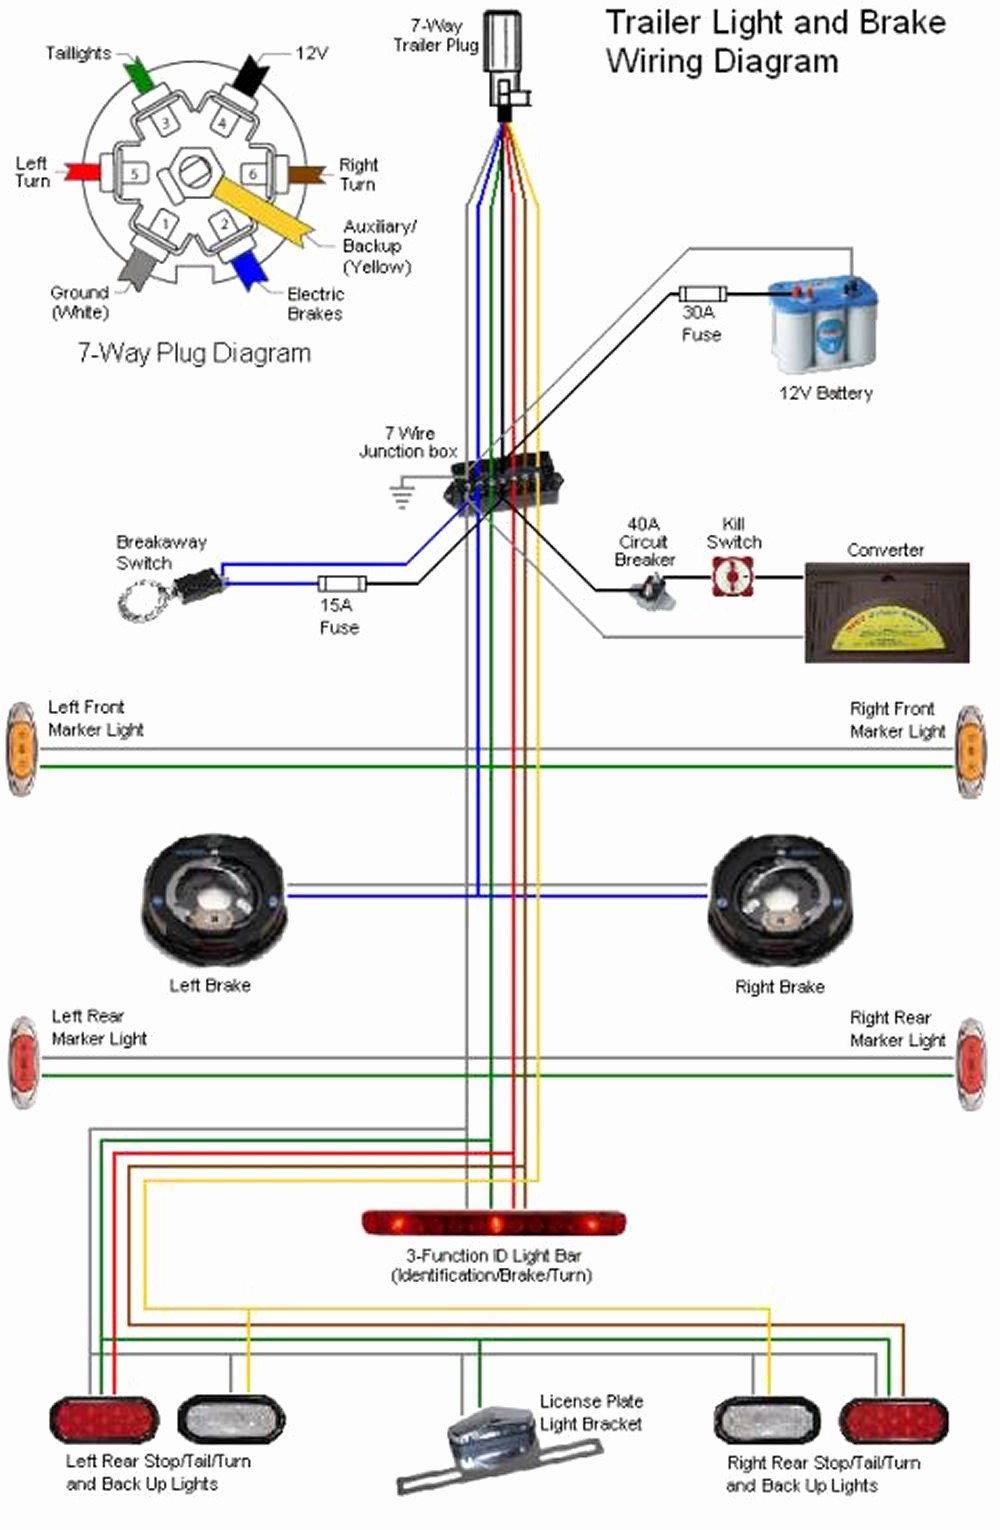 Hopkins 7 Way Wiring Diagram Natebird Trailer Wiring Diagram 7 Wire Circuit Truck to Trailer